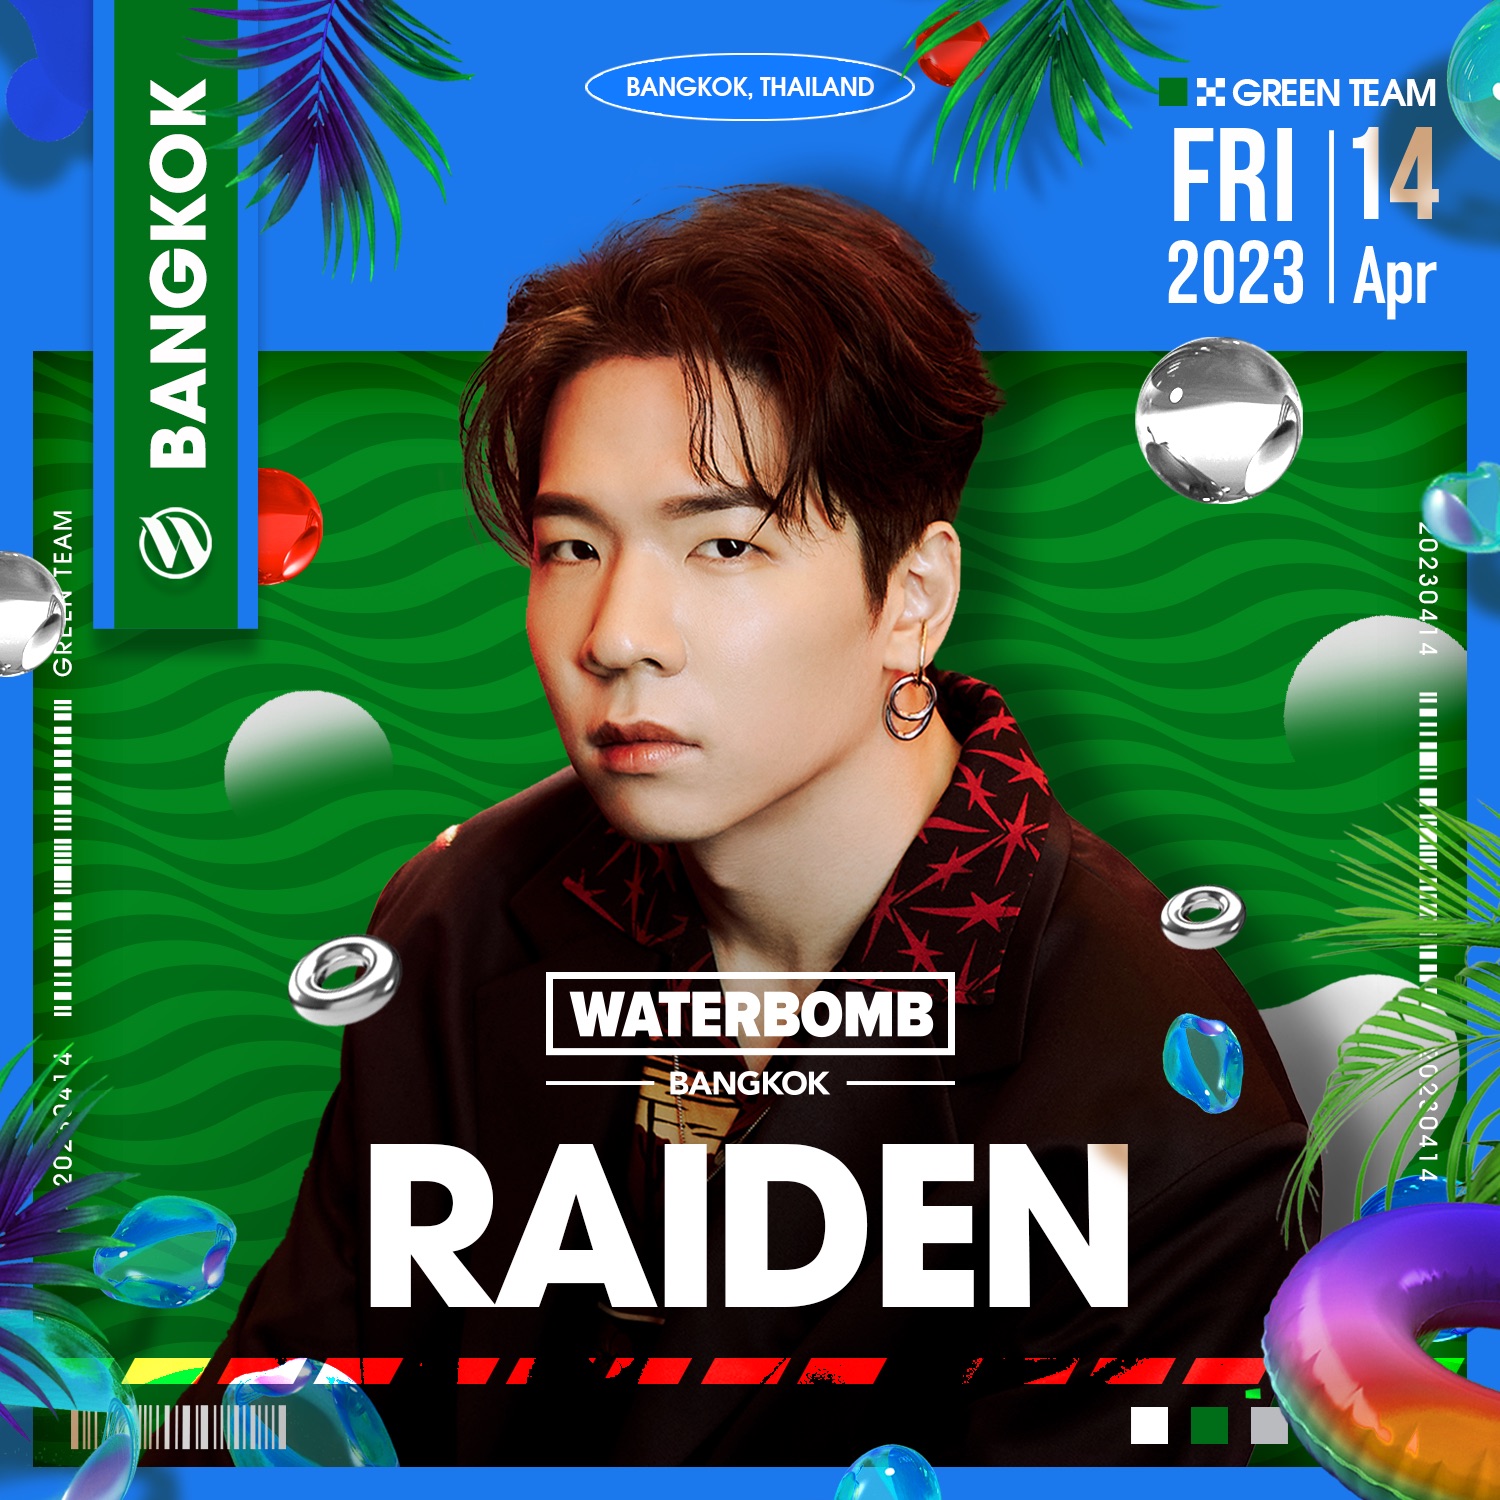 Raiden at WATERBOMB Bangkok 2023 Presented by Heineken® Silver